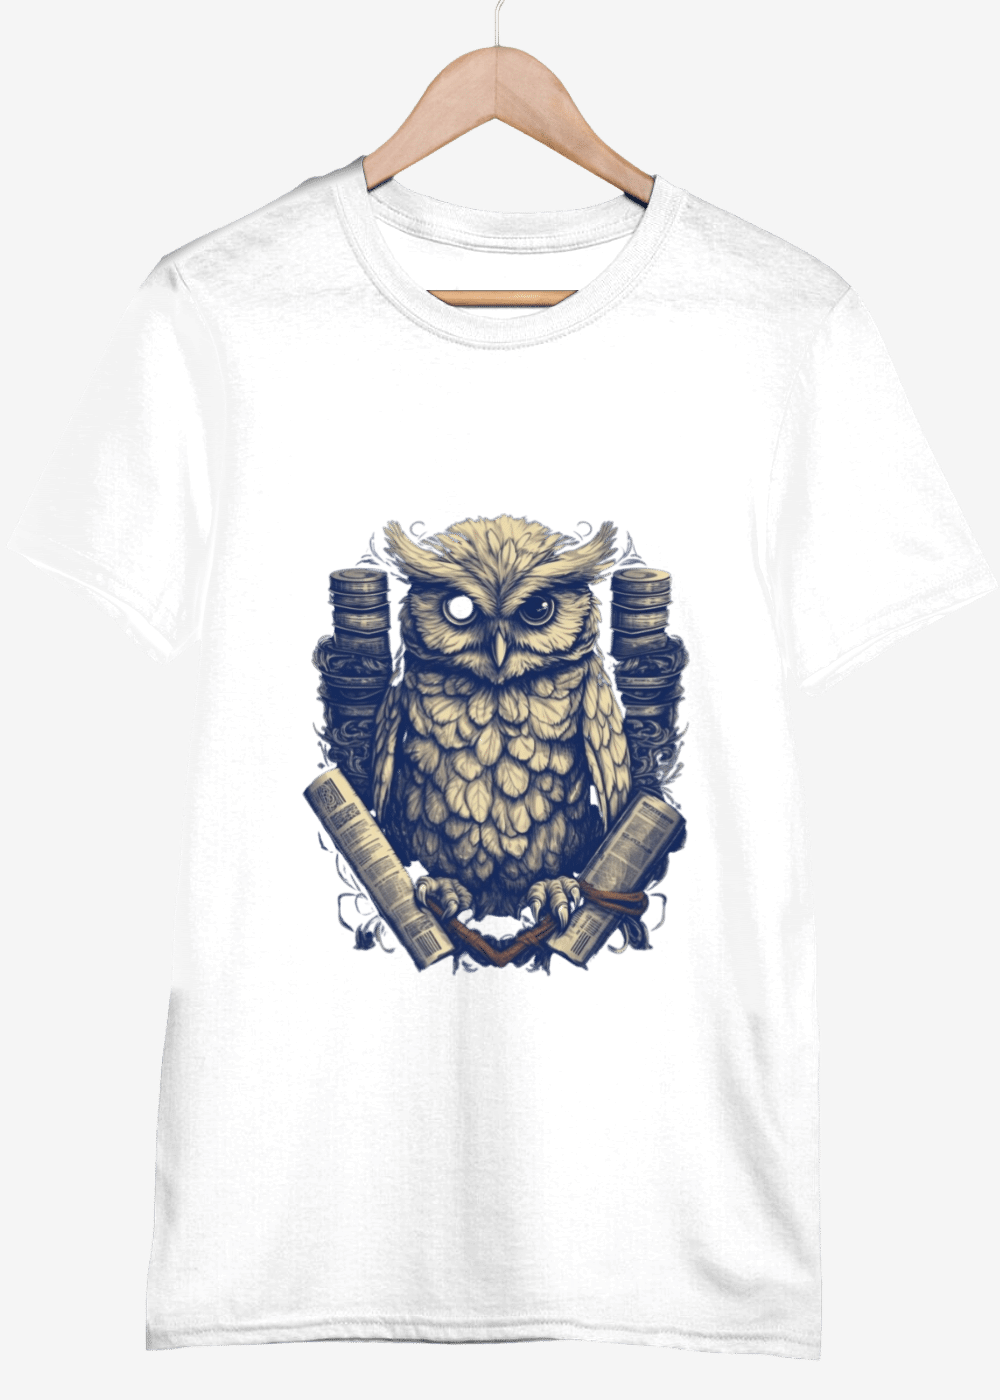 Night Owl T Shirt for Men - Night Lovers Tee